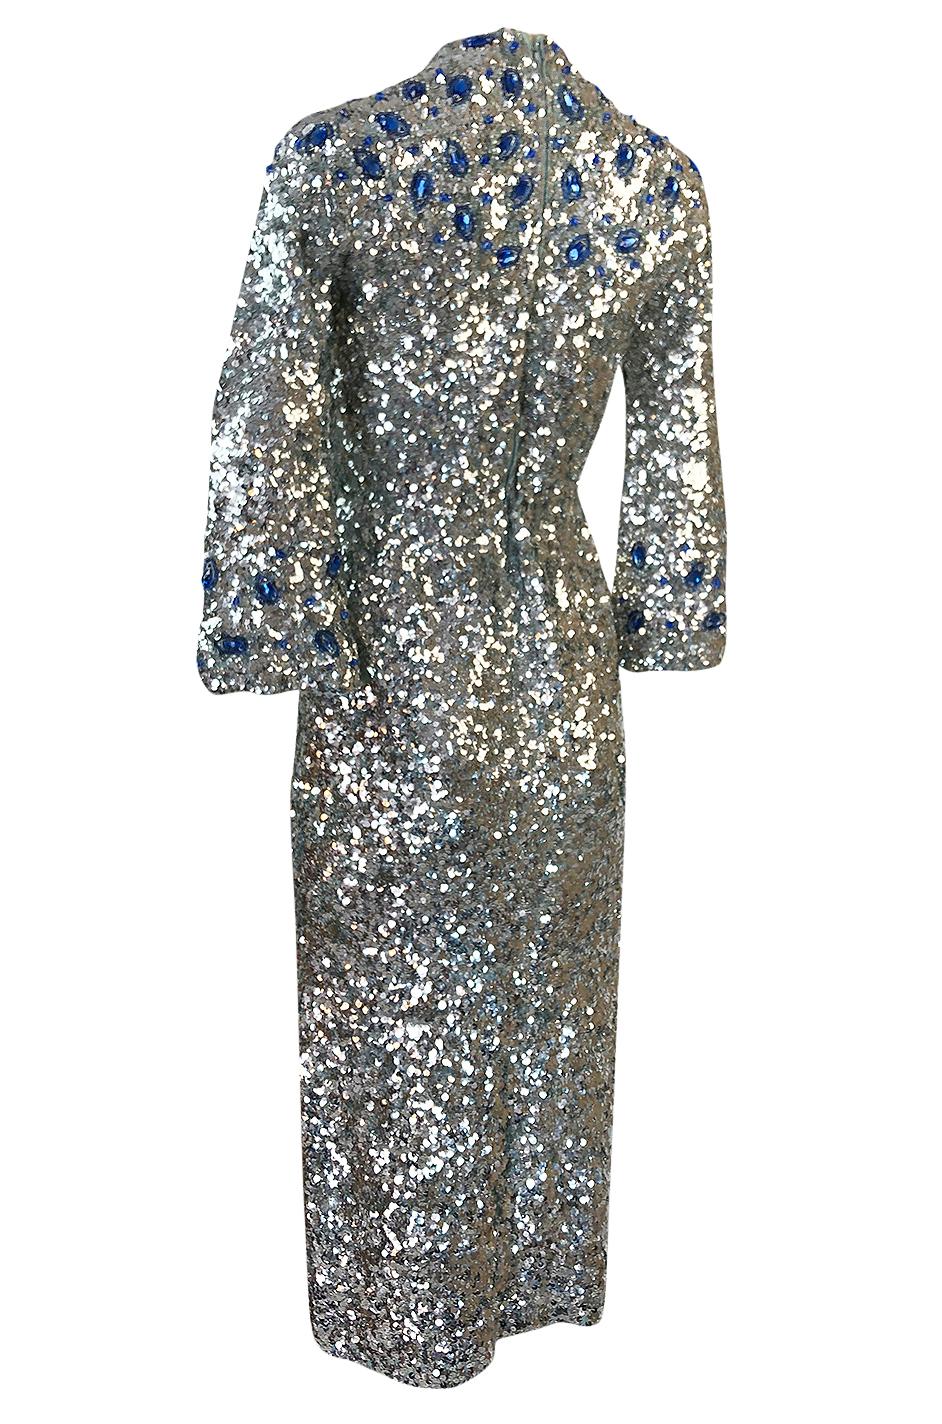 Women's c.1967 Gene Shelly Blue Crystal & Silver Sequin Stretch Knit Dress